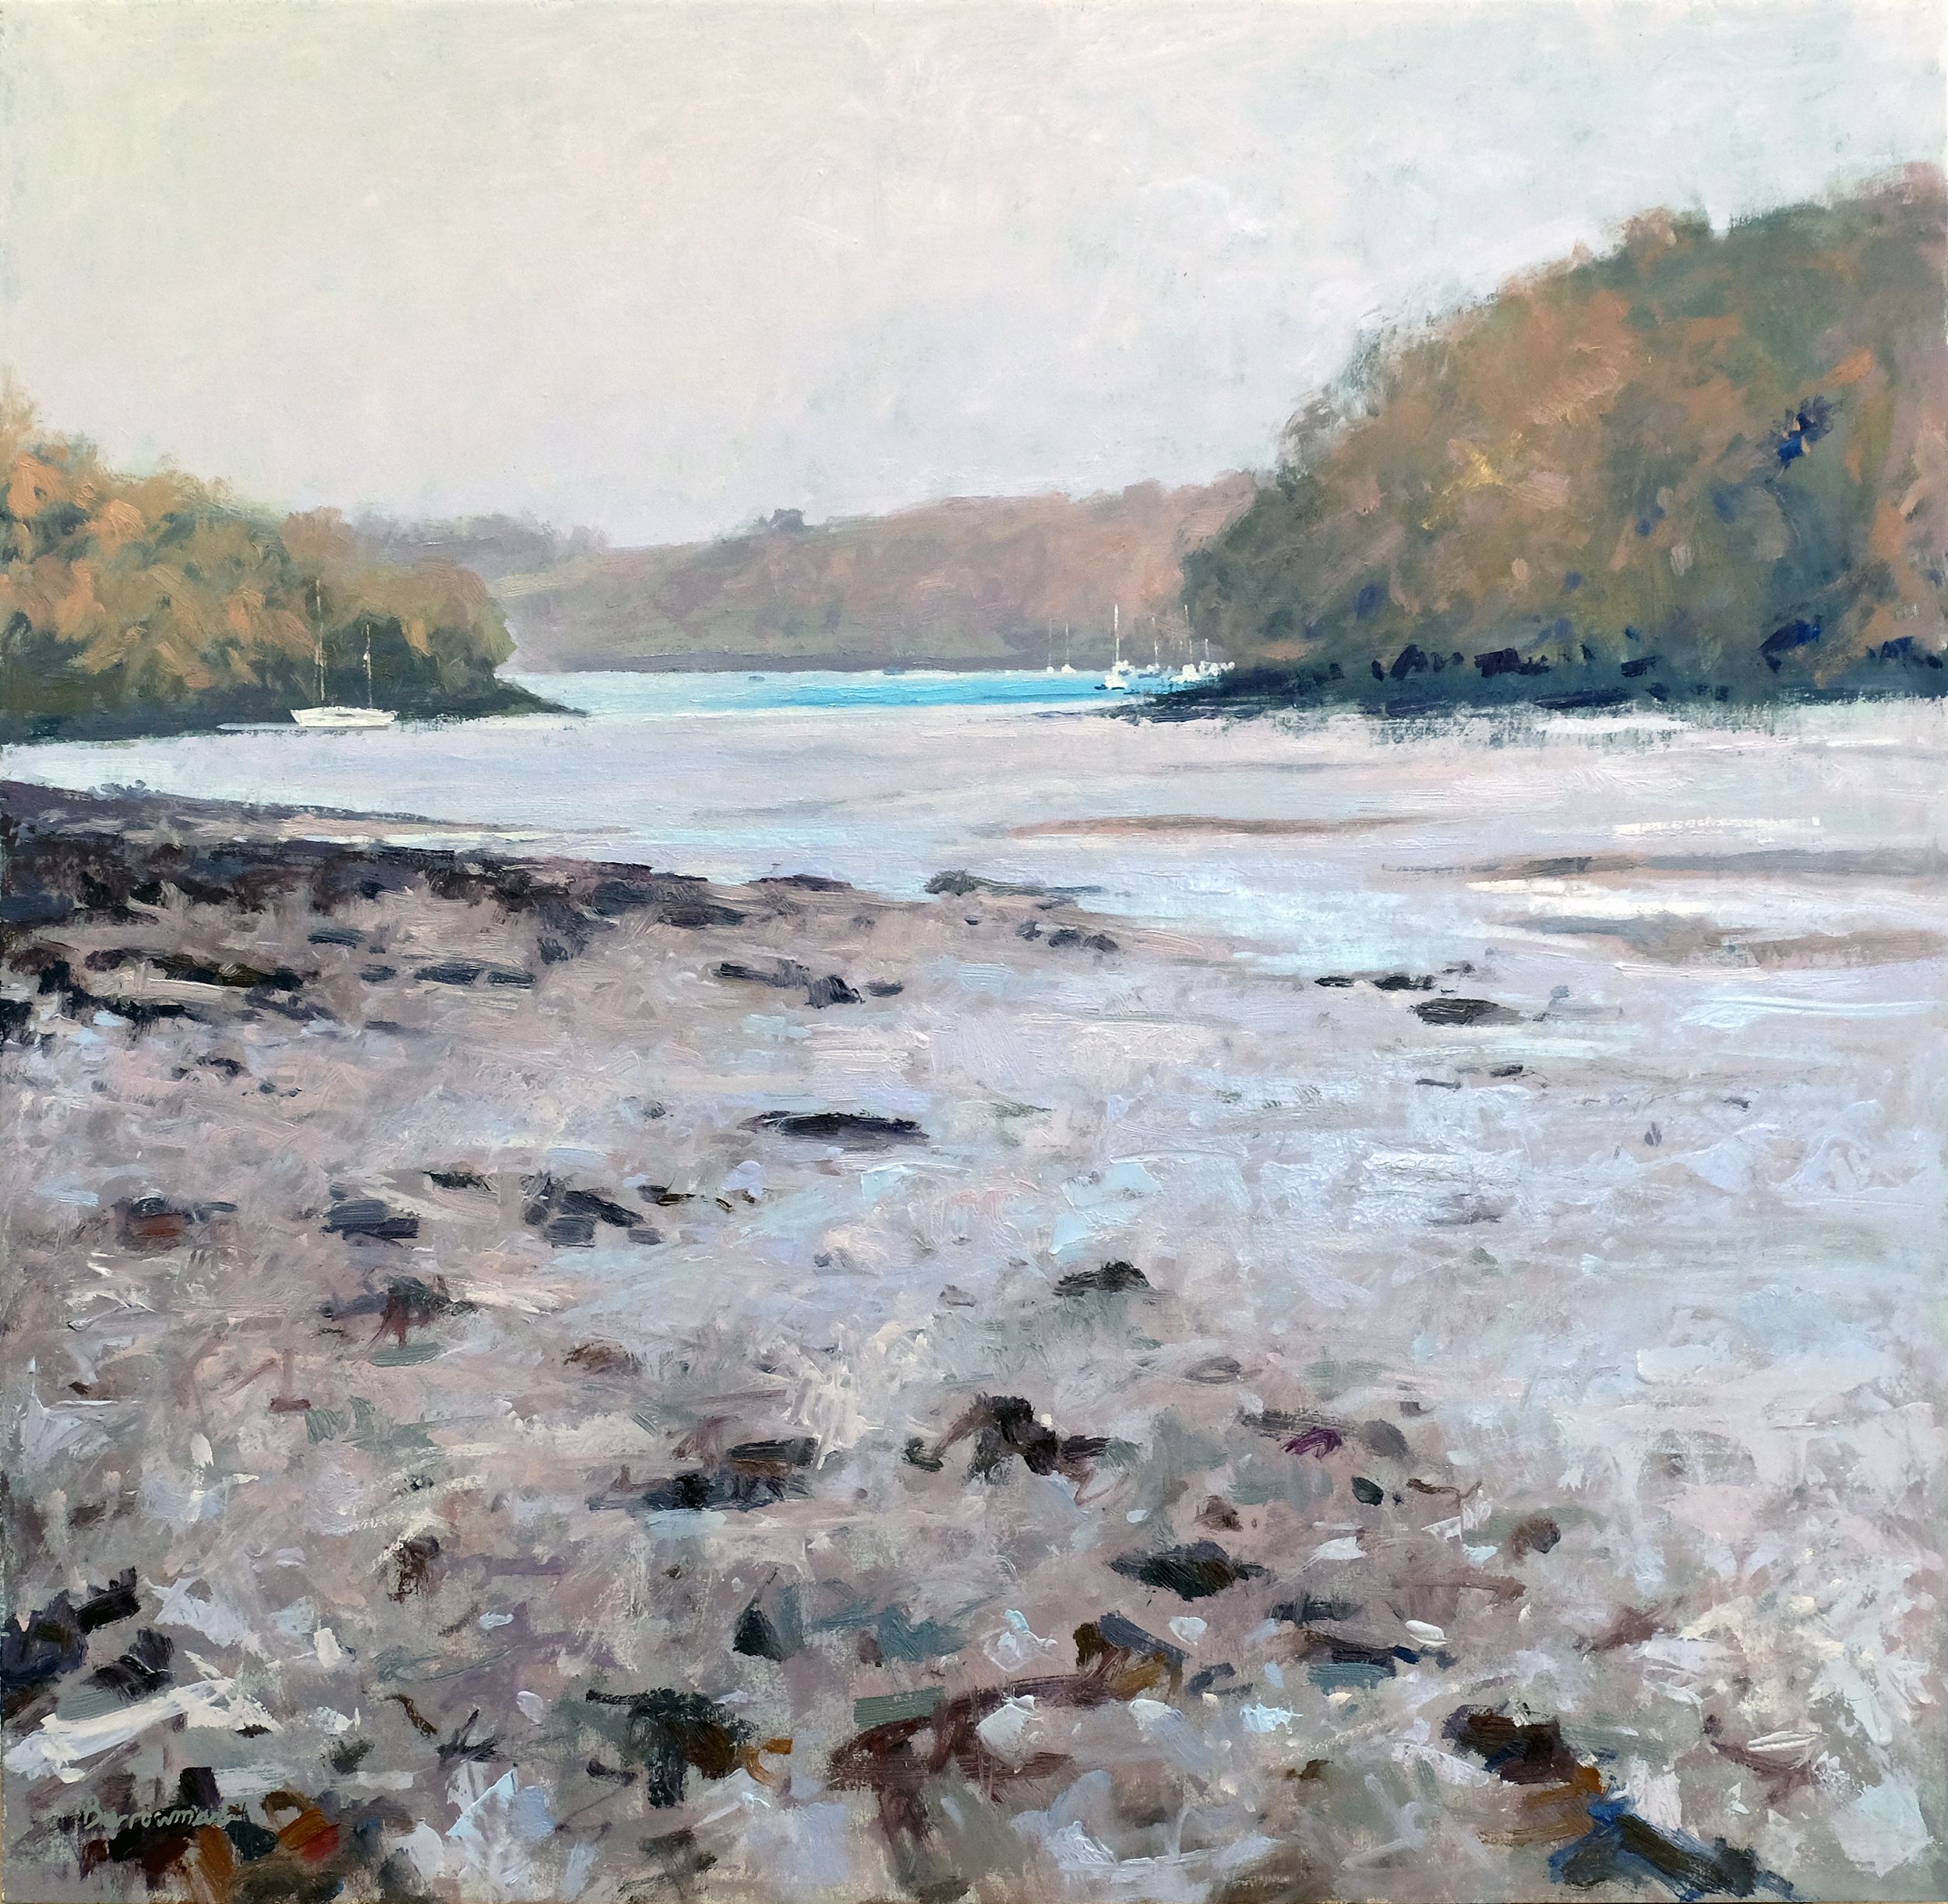 Ebbing tide, Lamouth Creek by Andrew Barrowman